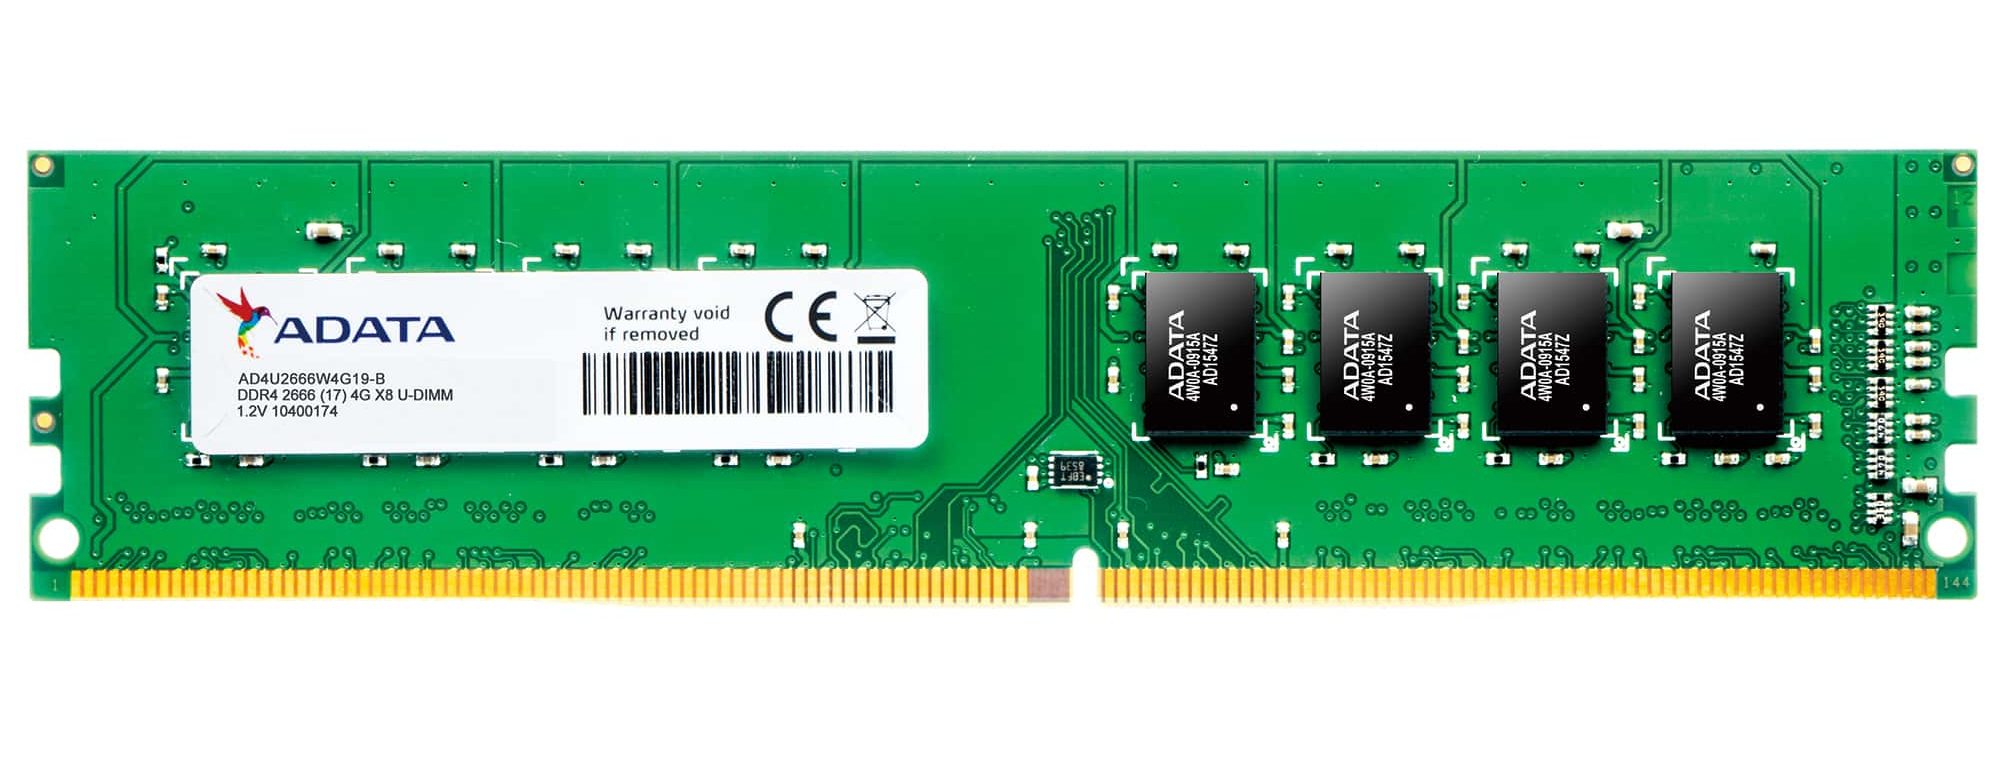 Ram Adata Value 16GB DDR4 2666 (AD4U2666316G19-S)